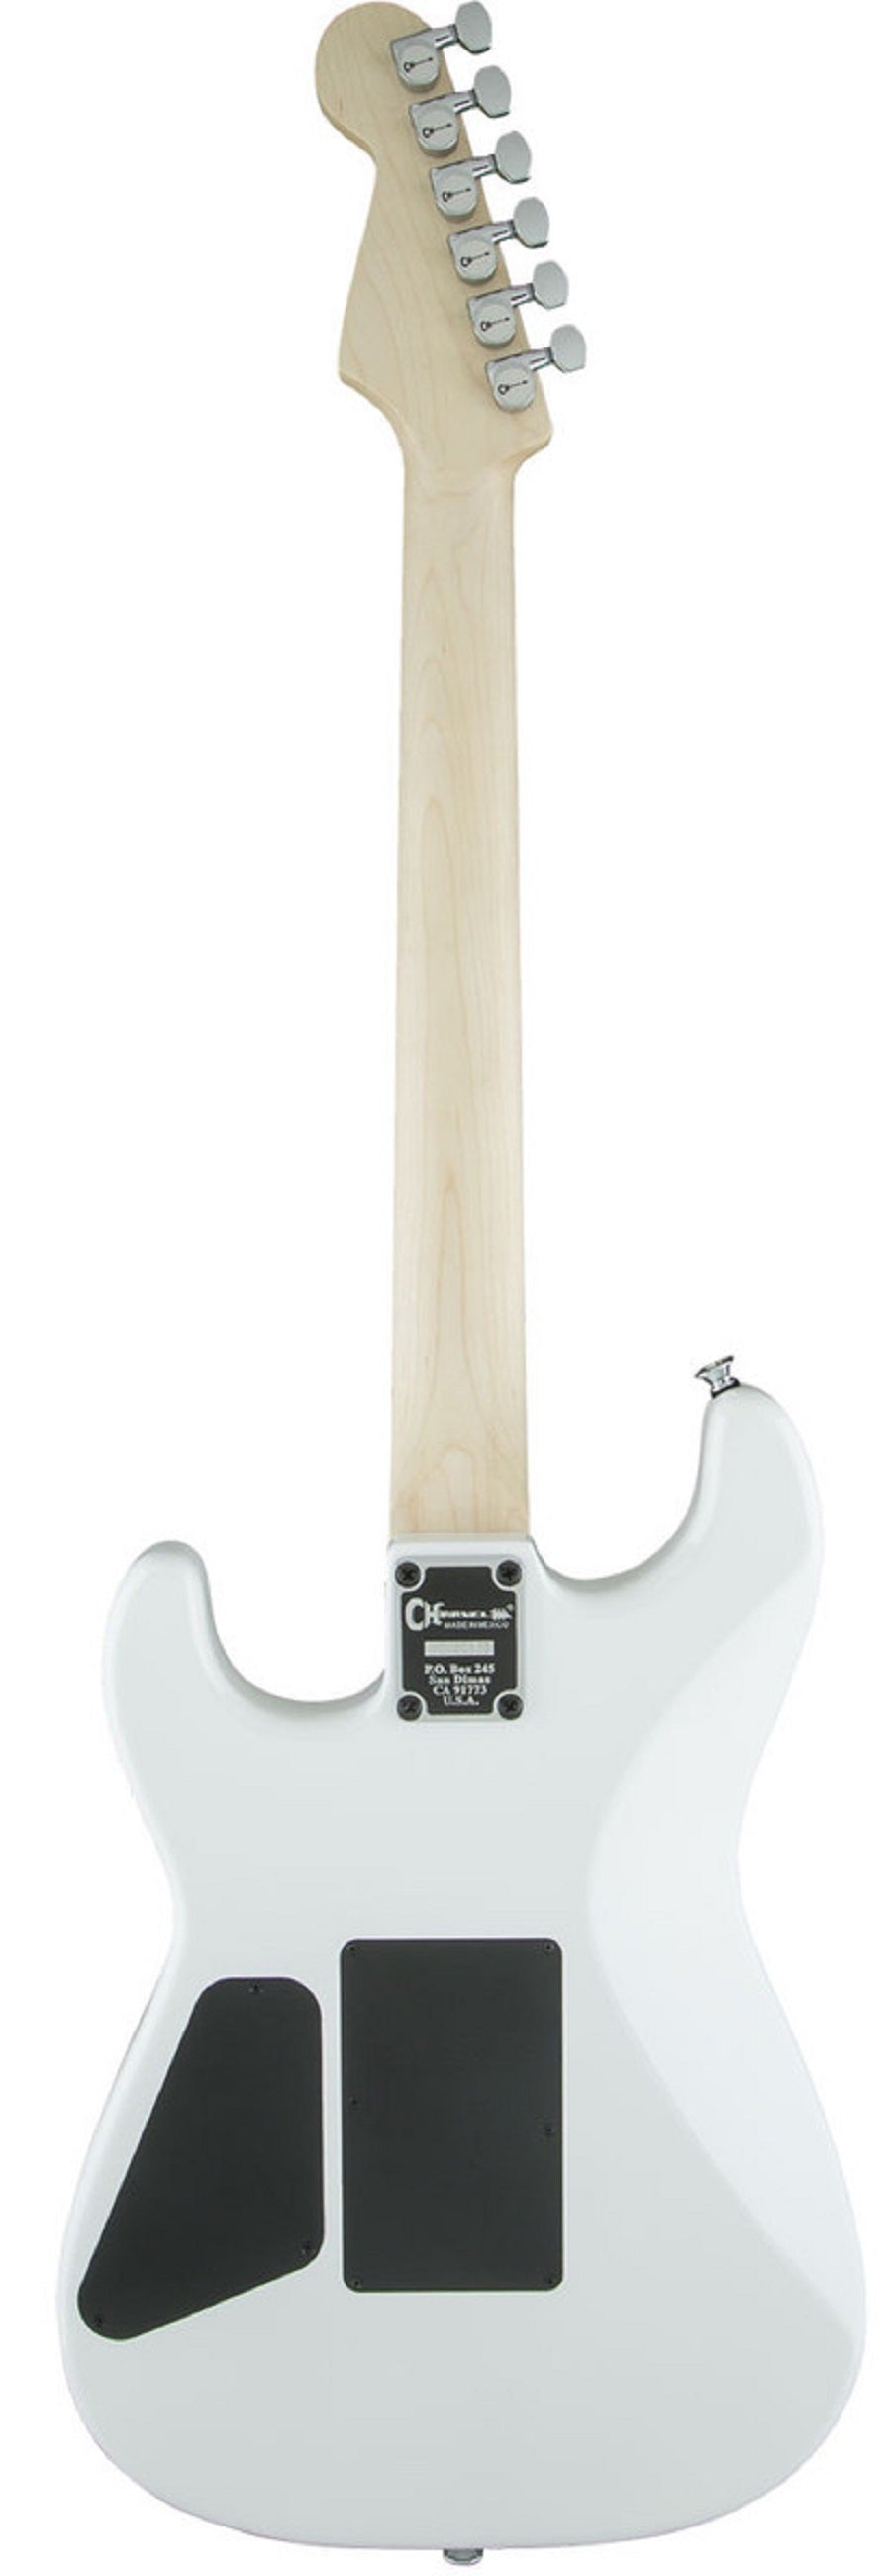 Charvel Pro Mod San Dimas Style 1 Electric Guitar - Snow White